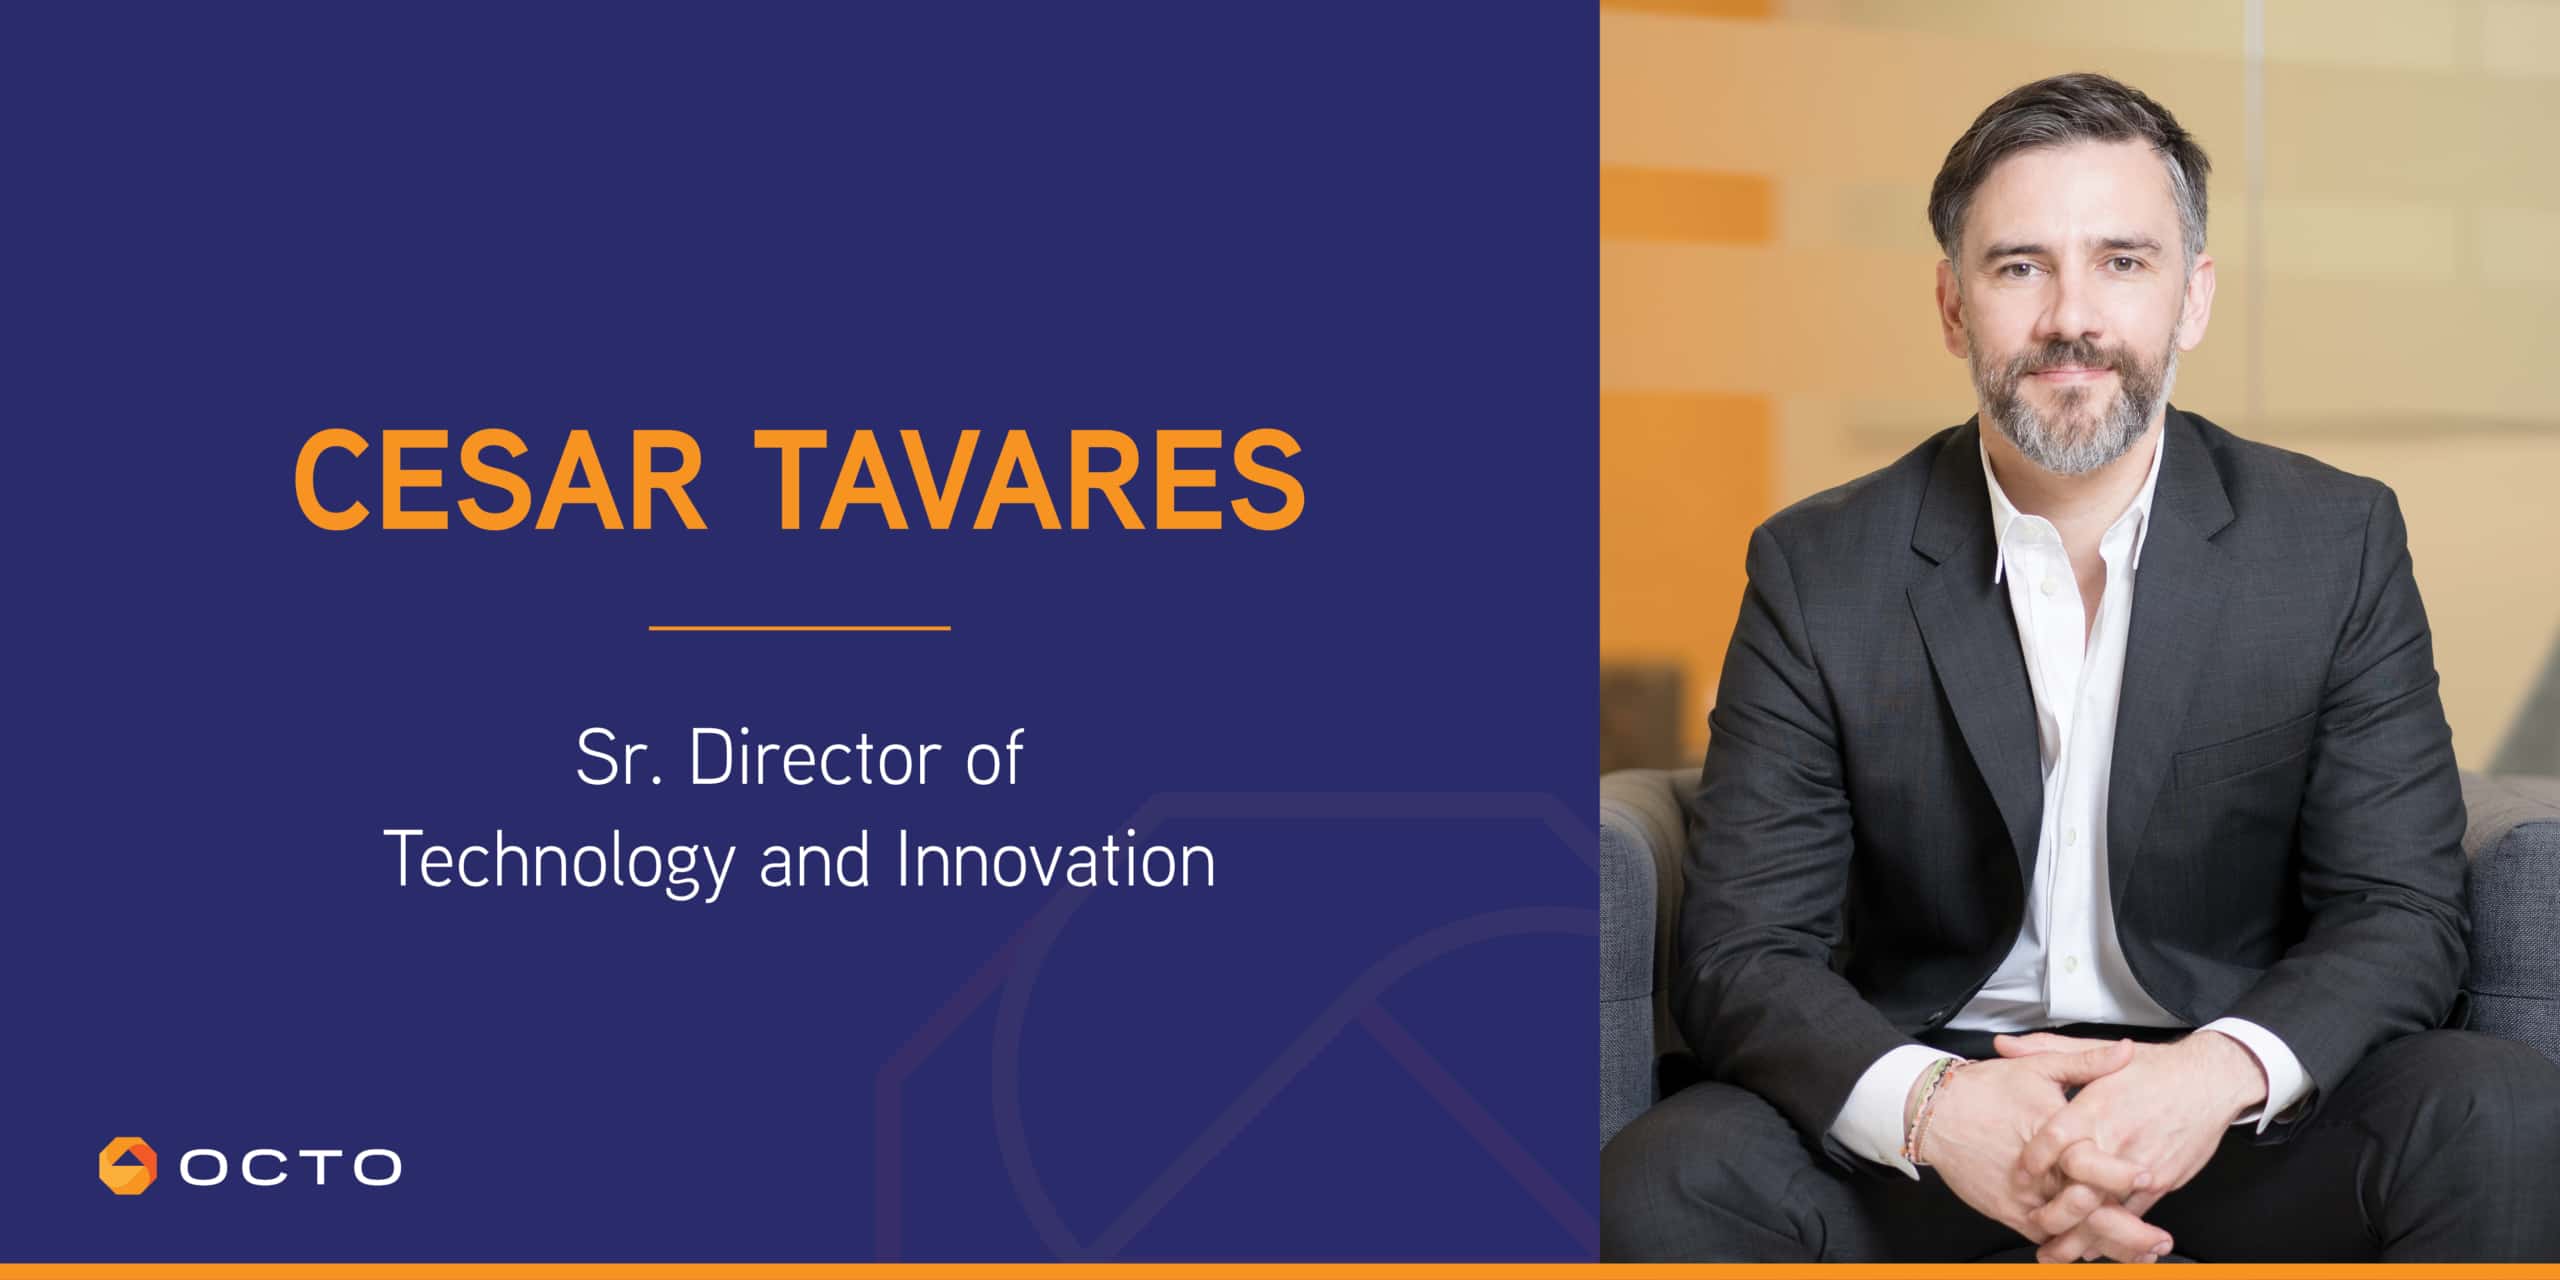 Cesar Tavares - Sr. Director of Technology and Innovation